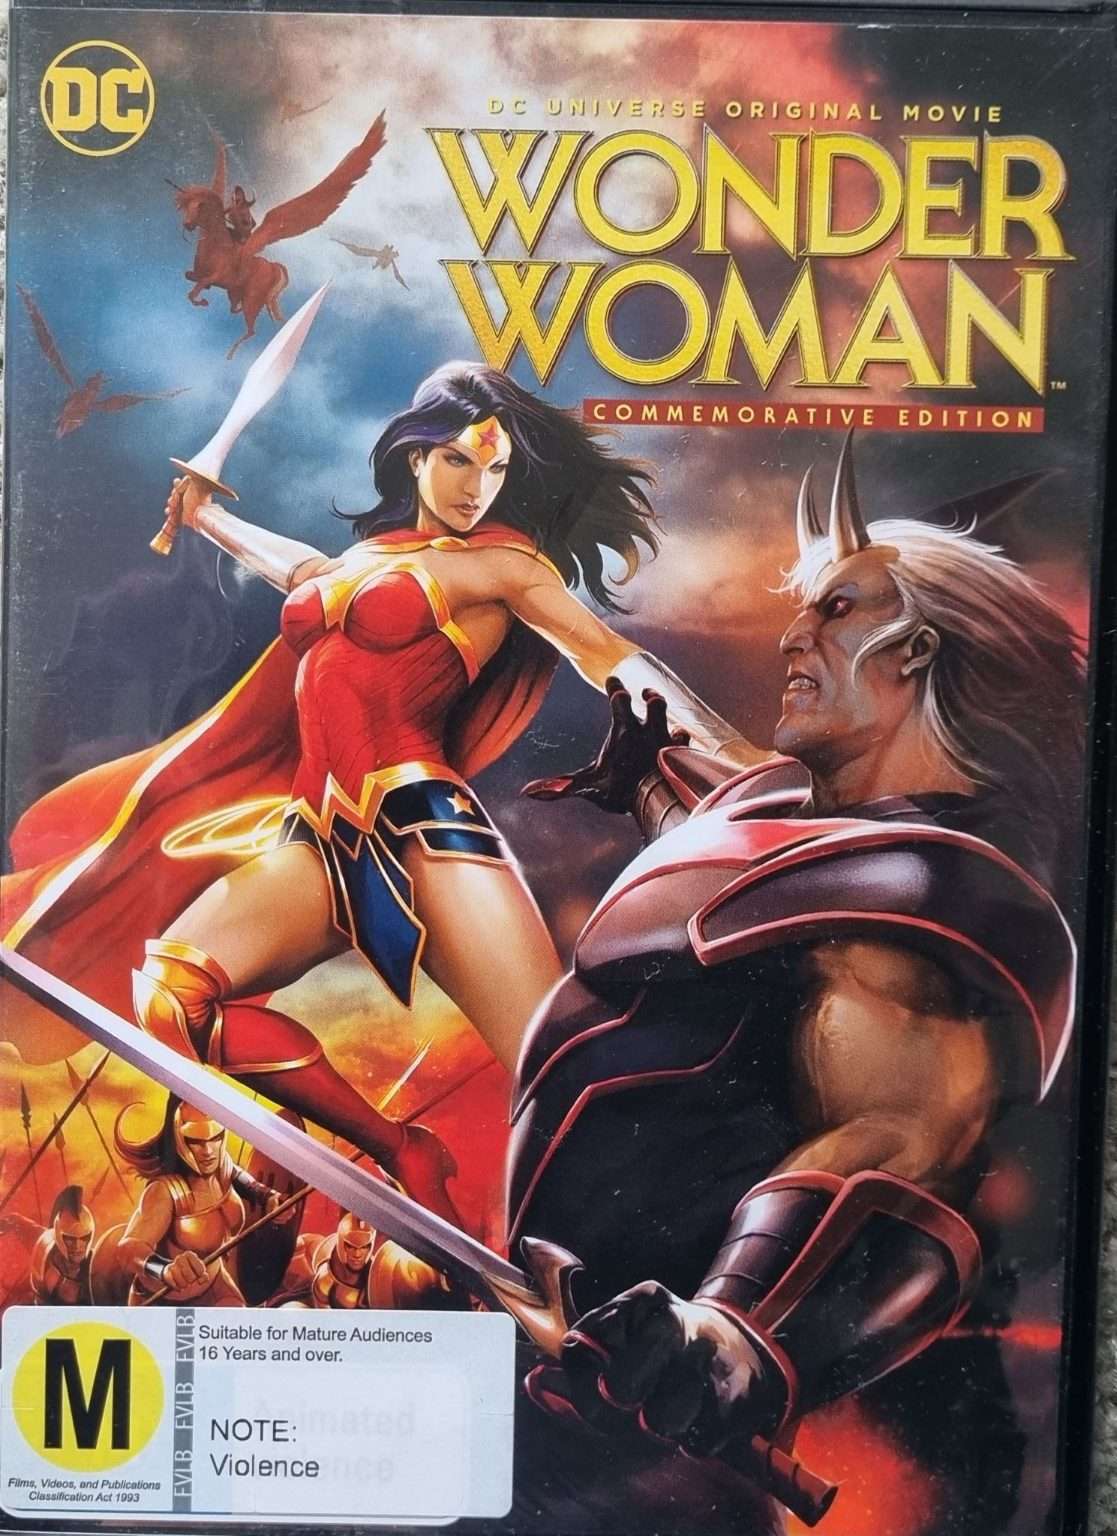 Wonder Woman Commemorative Edition Animated